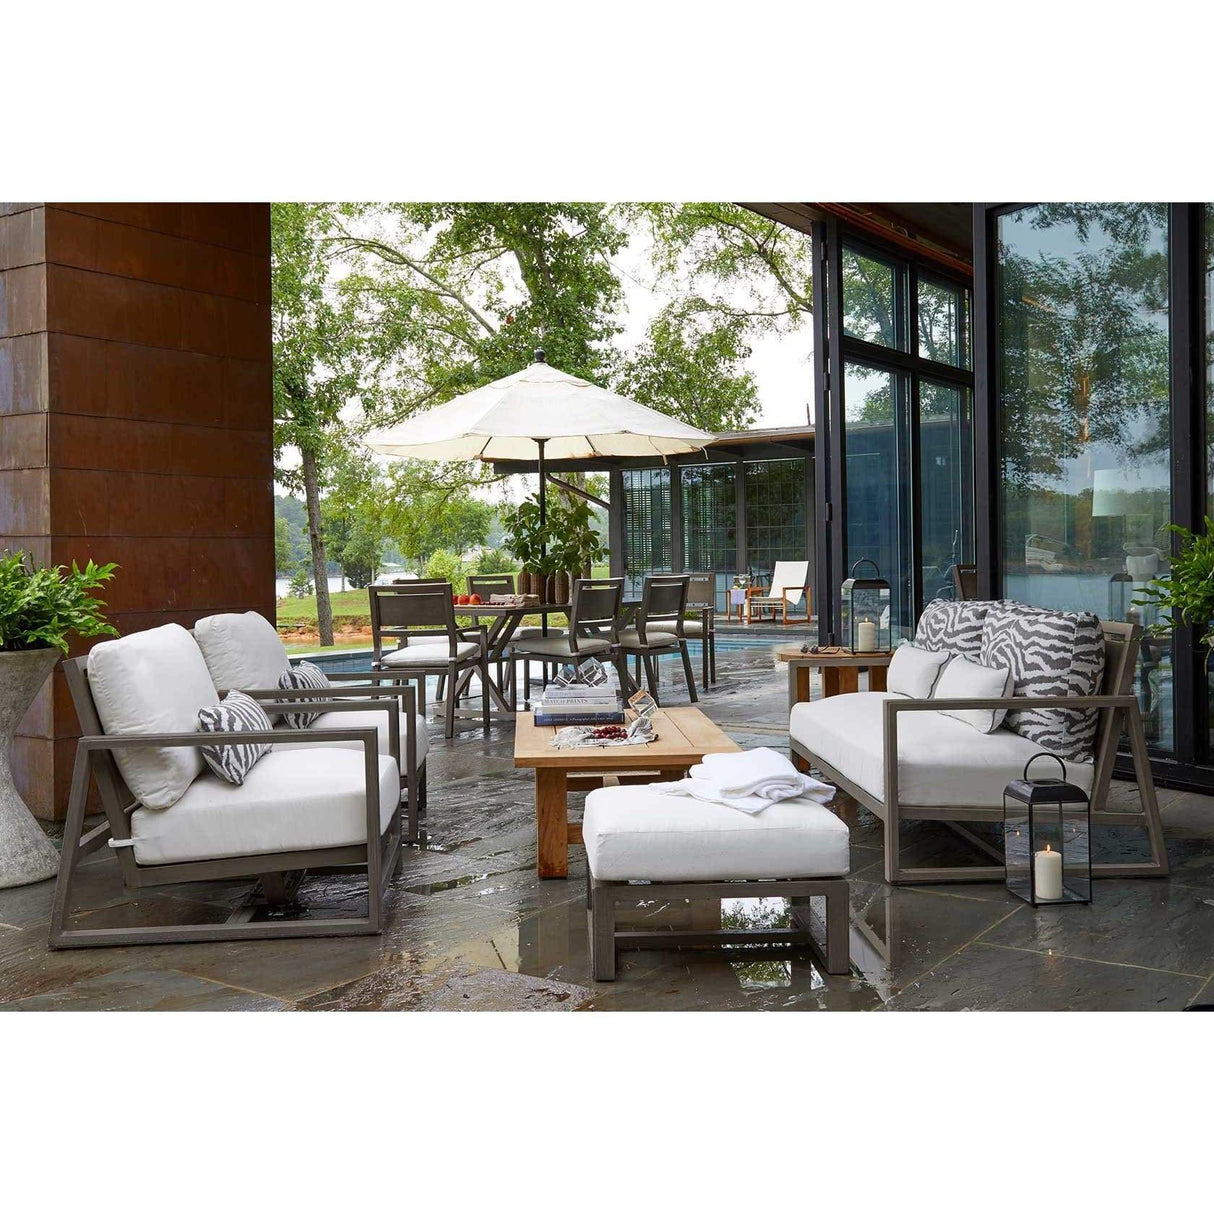 Summer Classics Avondale Aluminum Lounge Chair Furniture summer-classics-340131+C595H3884W3884